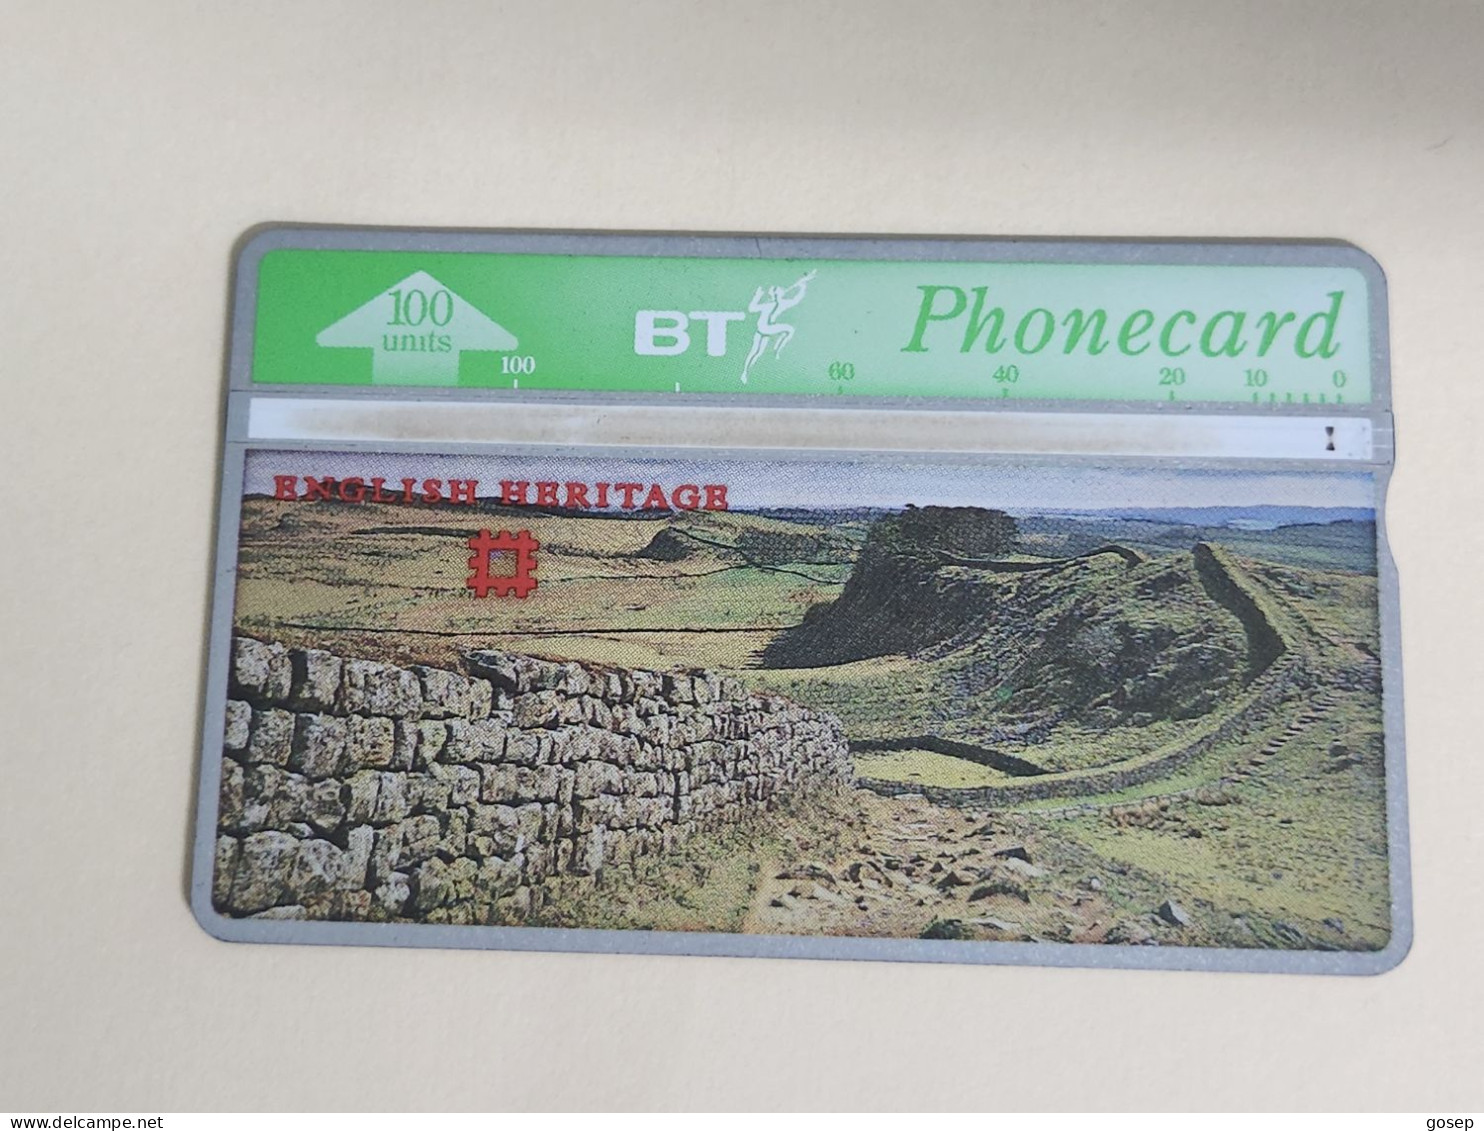 United Kingdom-(BTA117)-HERITAGE-Hadrian's Wall-(204)(100units)(527H20786)price Cataloge3.00£-used+1card Prepiad Free - BT Emissions Publicitaires